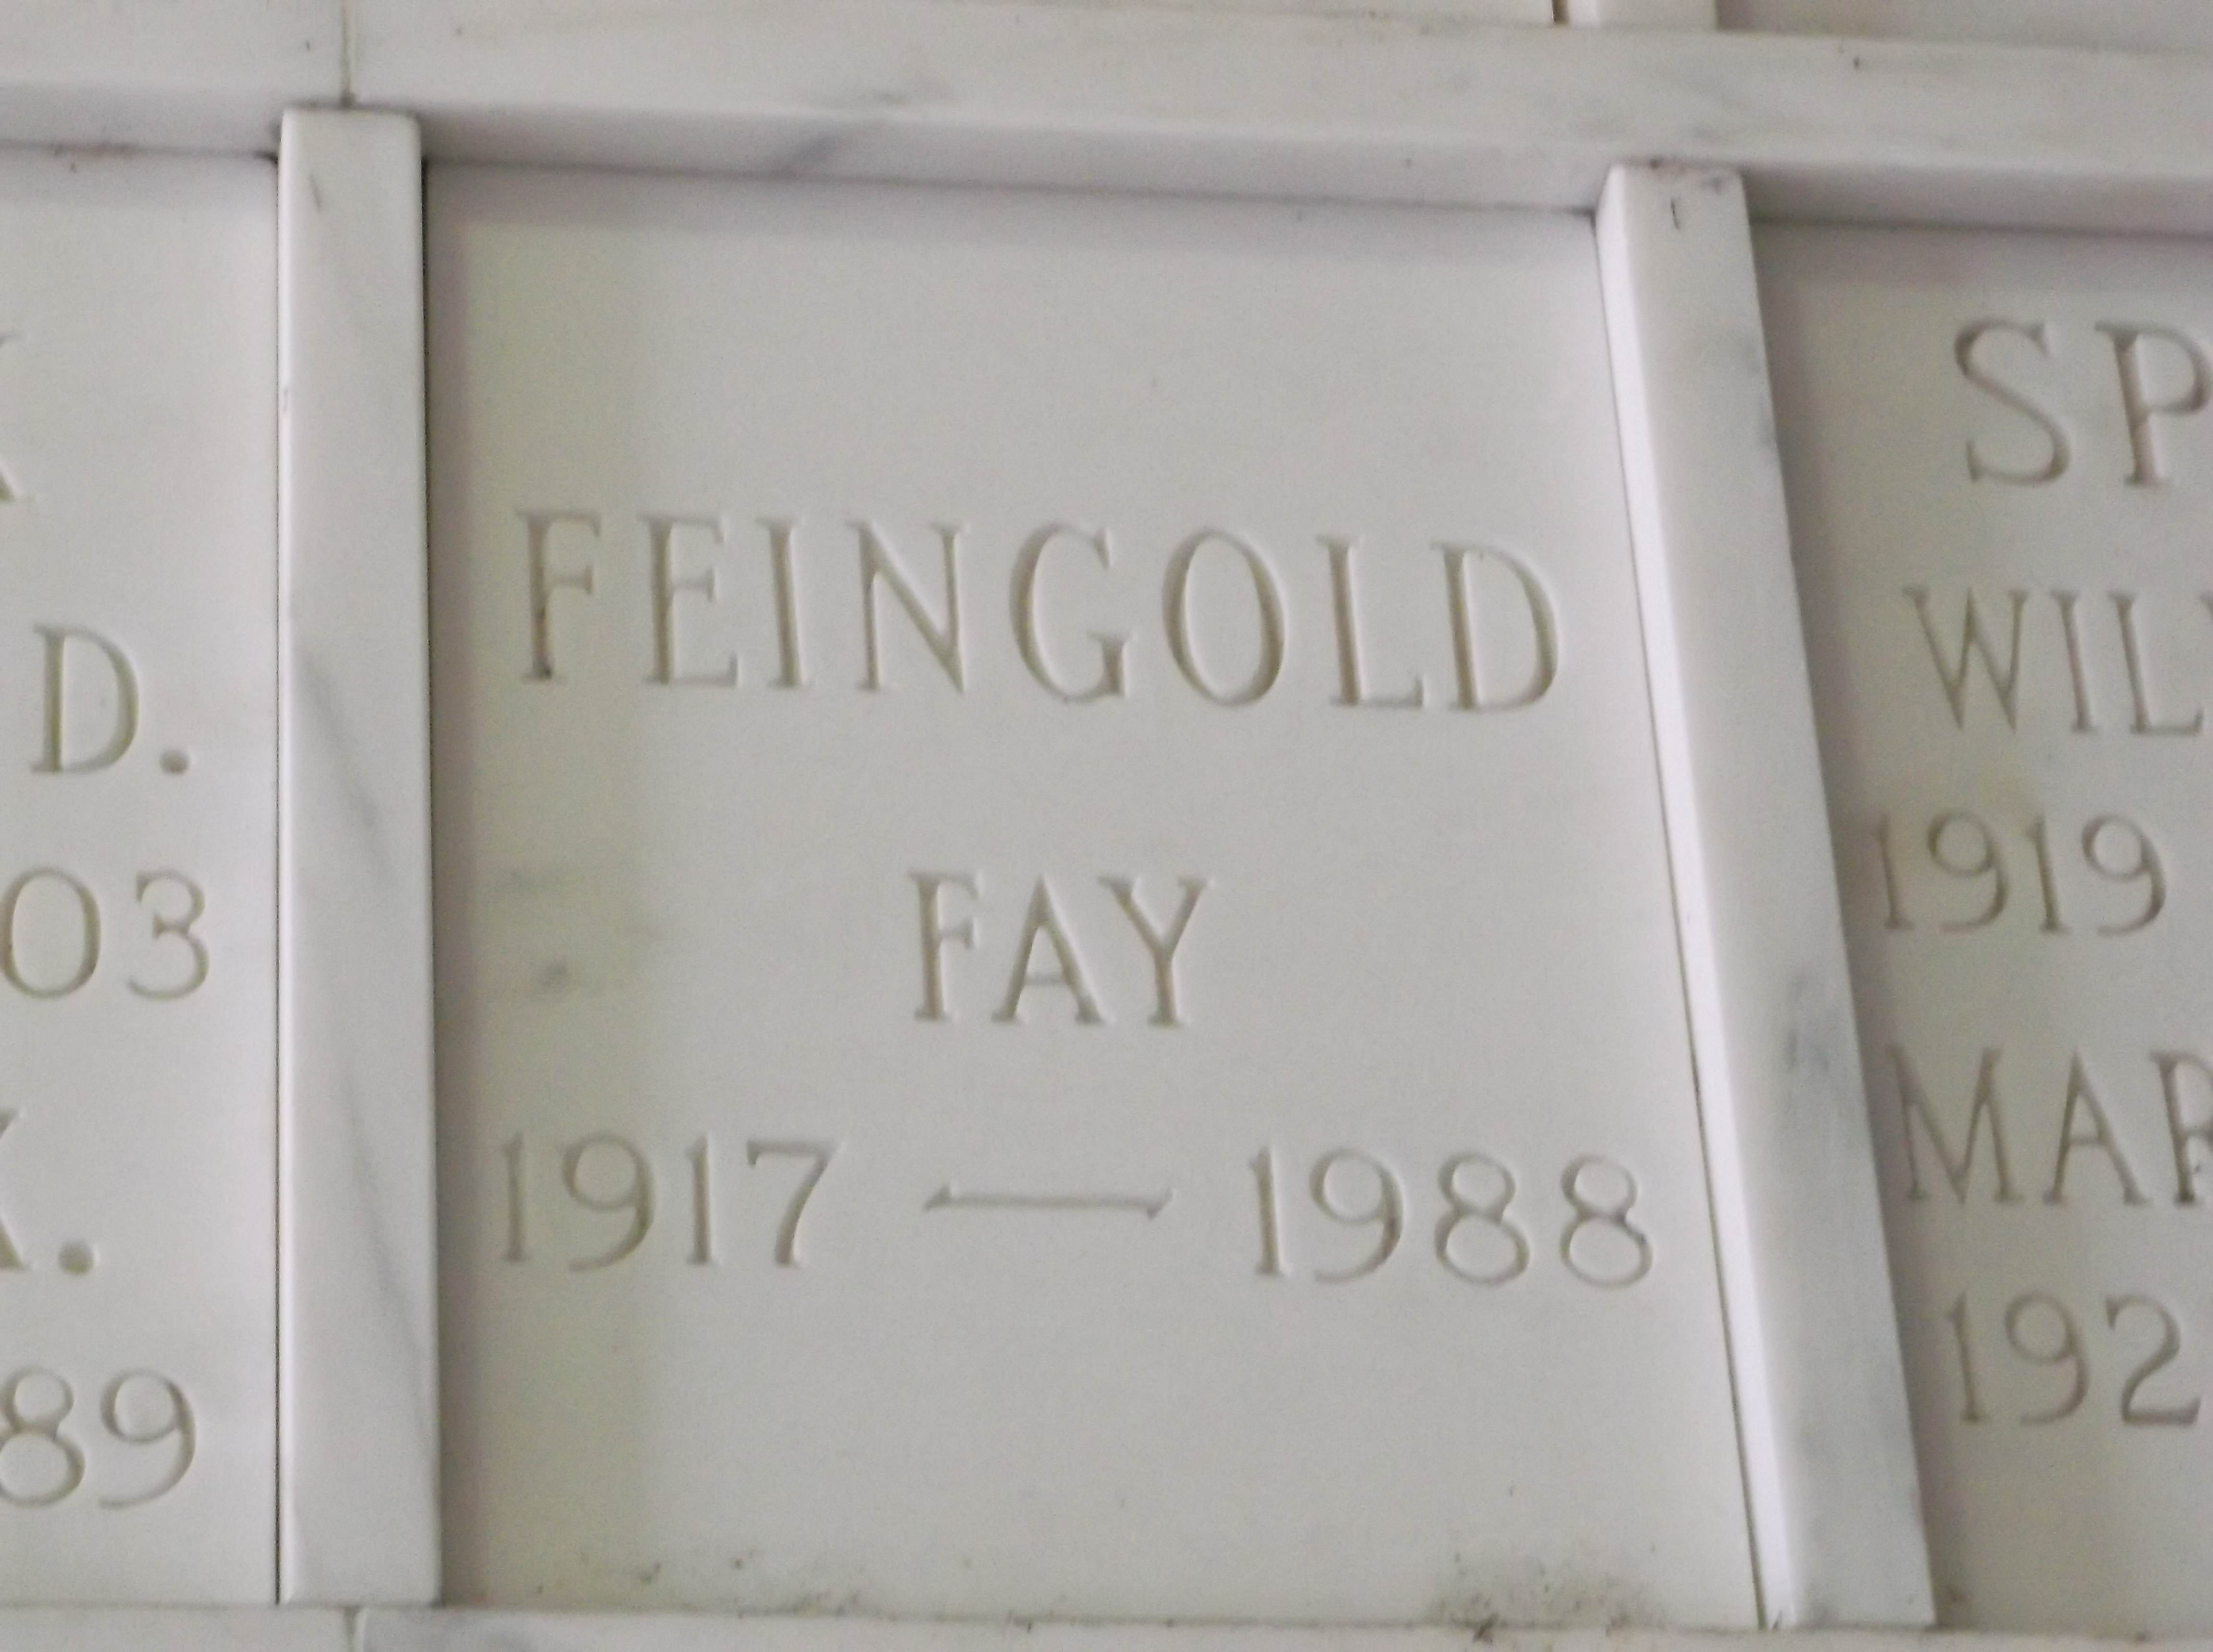 Fay Feingold